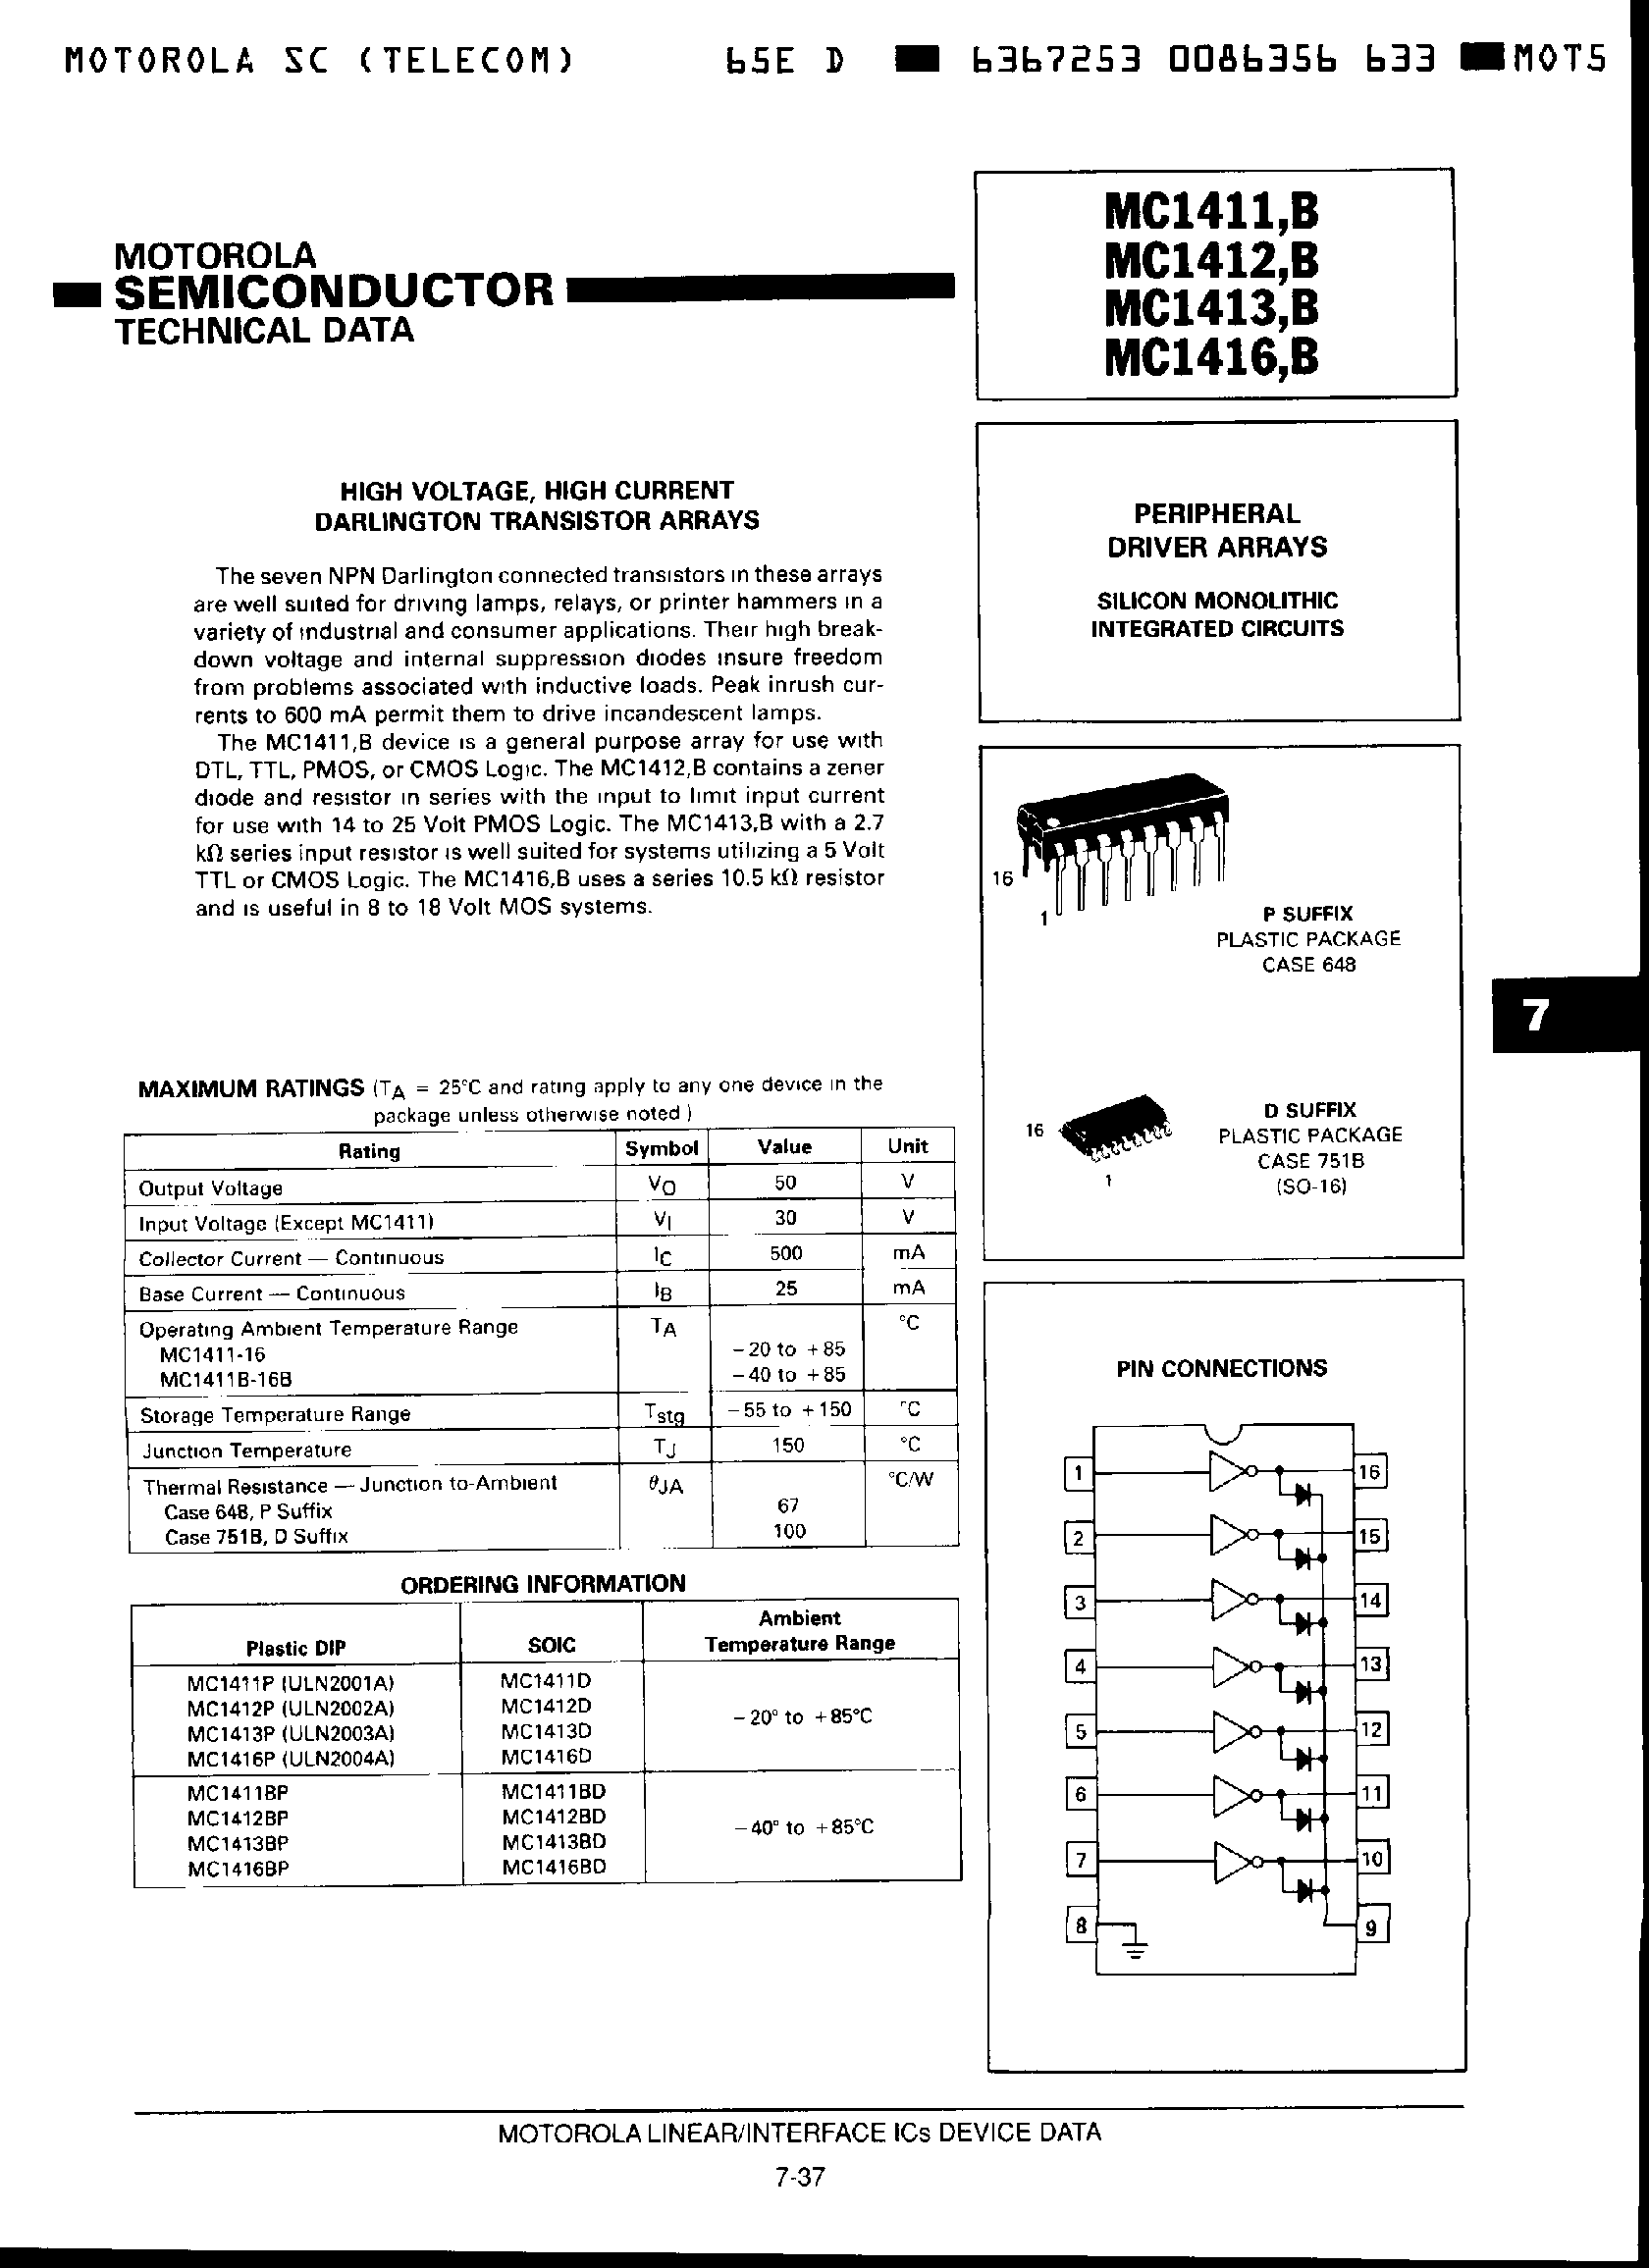 Datasheet MC1413D - PERIPHERAL DRIVER ARRAYS page 1